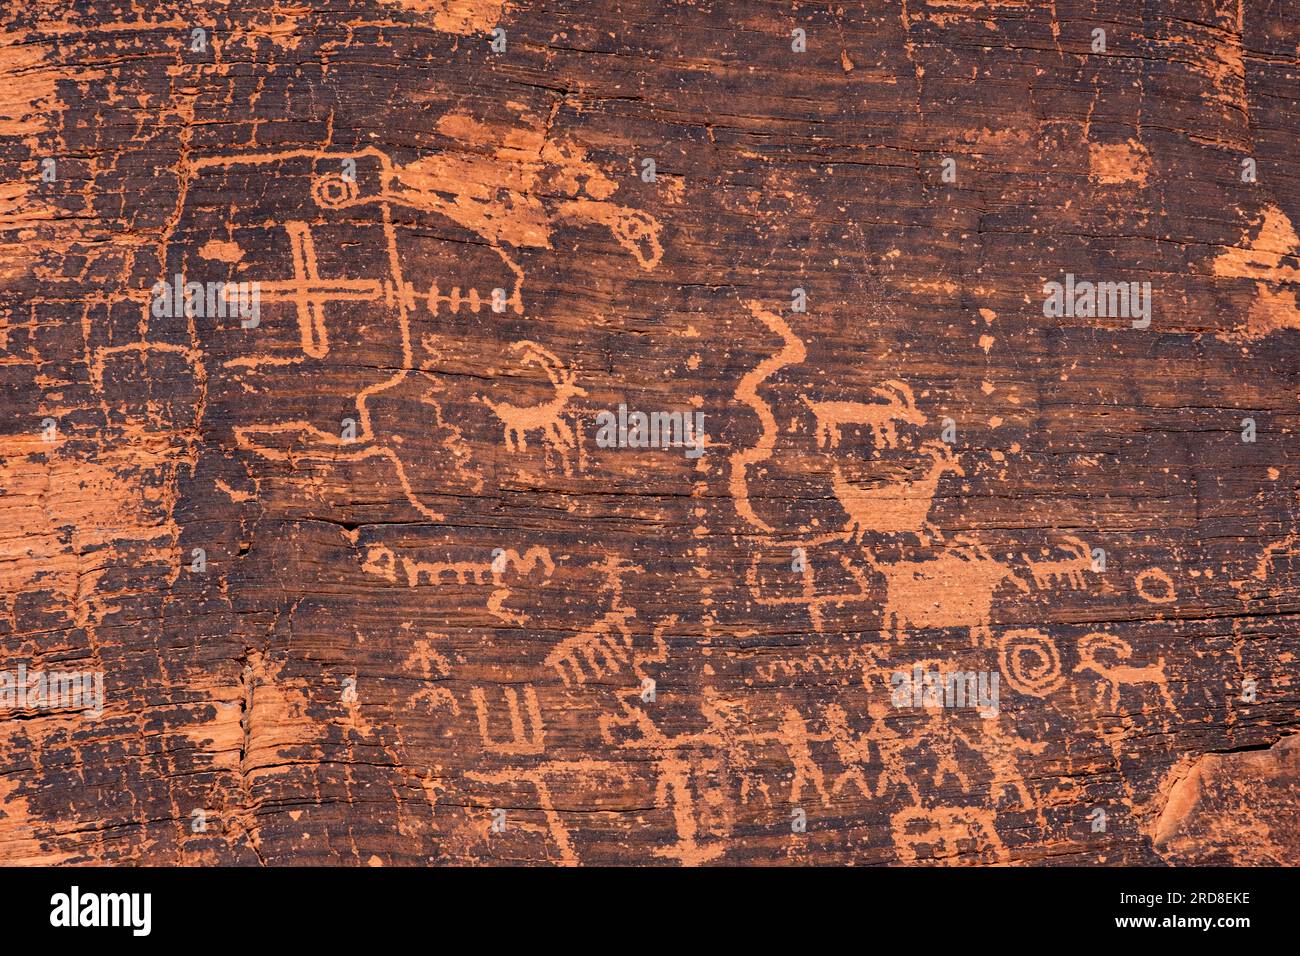 Felskunst der amerikanischen Ureinwohner (Petroglyphen) an der Canyon Wall, Petroglyph Canyon, Mouse's Tank Trail, Valley of Fire State Park, Nevada, USA Stockfoto